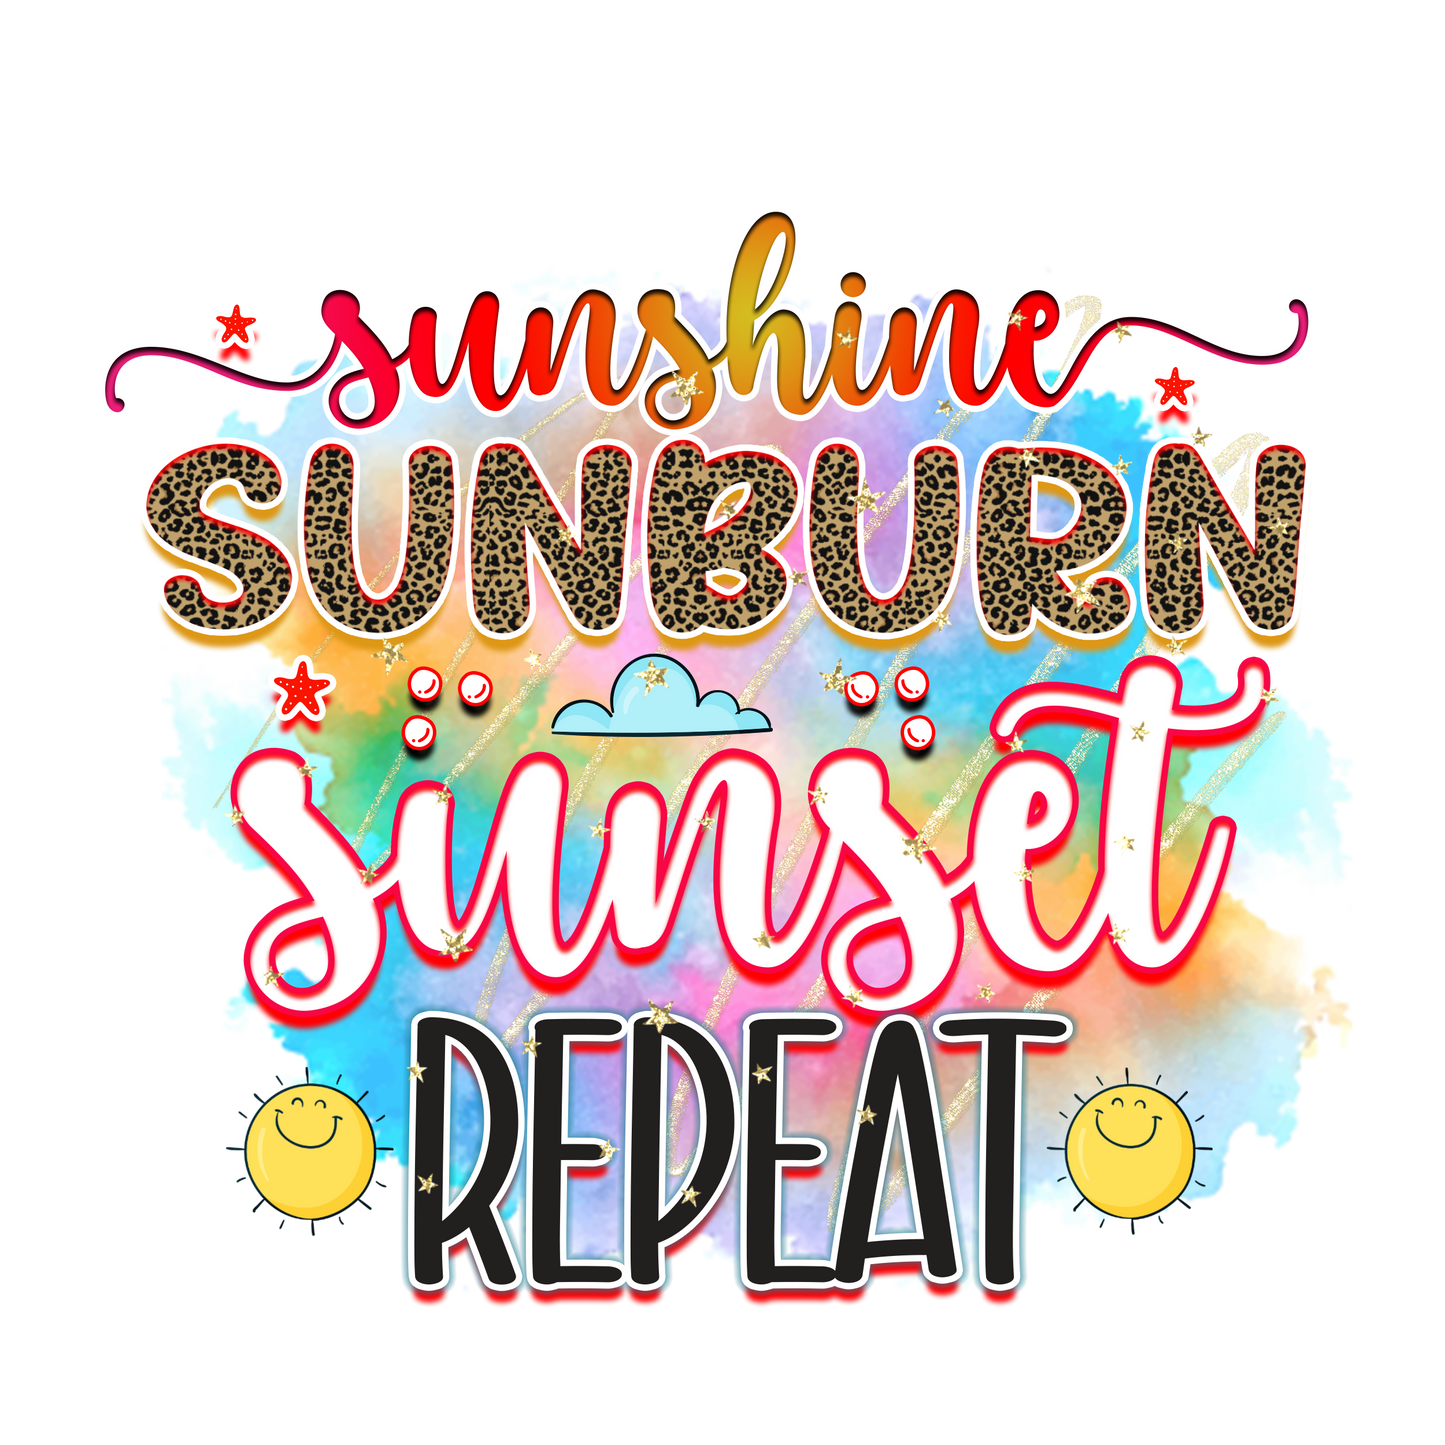 Sunshine Sunburn Sunset Repeat Youth Tshirt